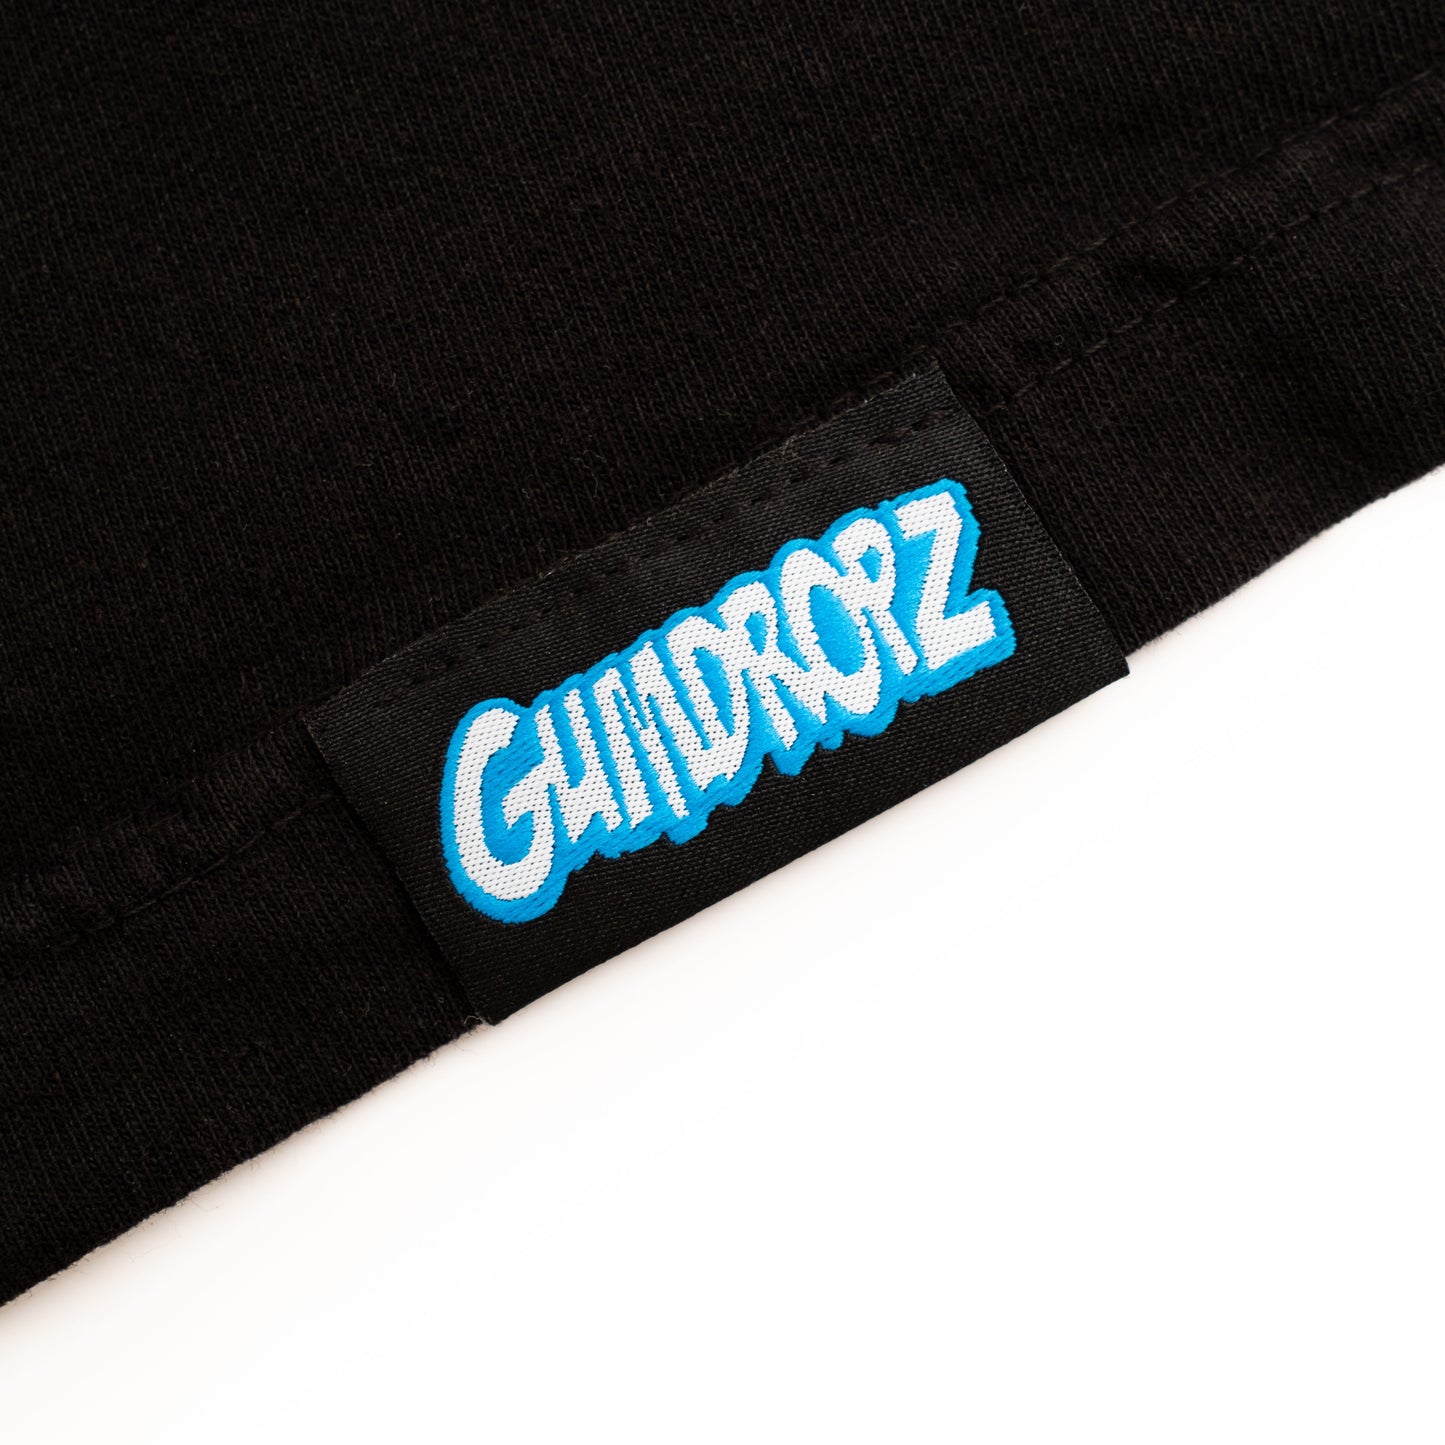 GUMDROPZ 420 T-SHIRT (BLACK)